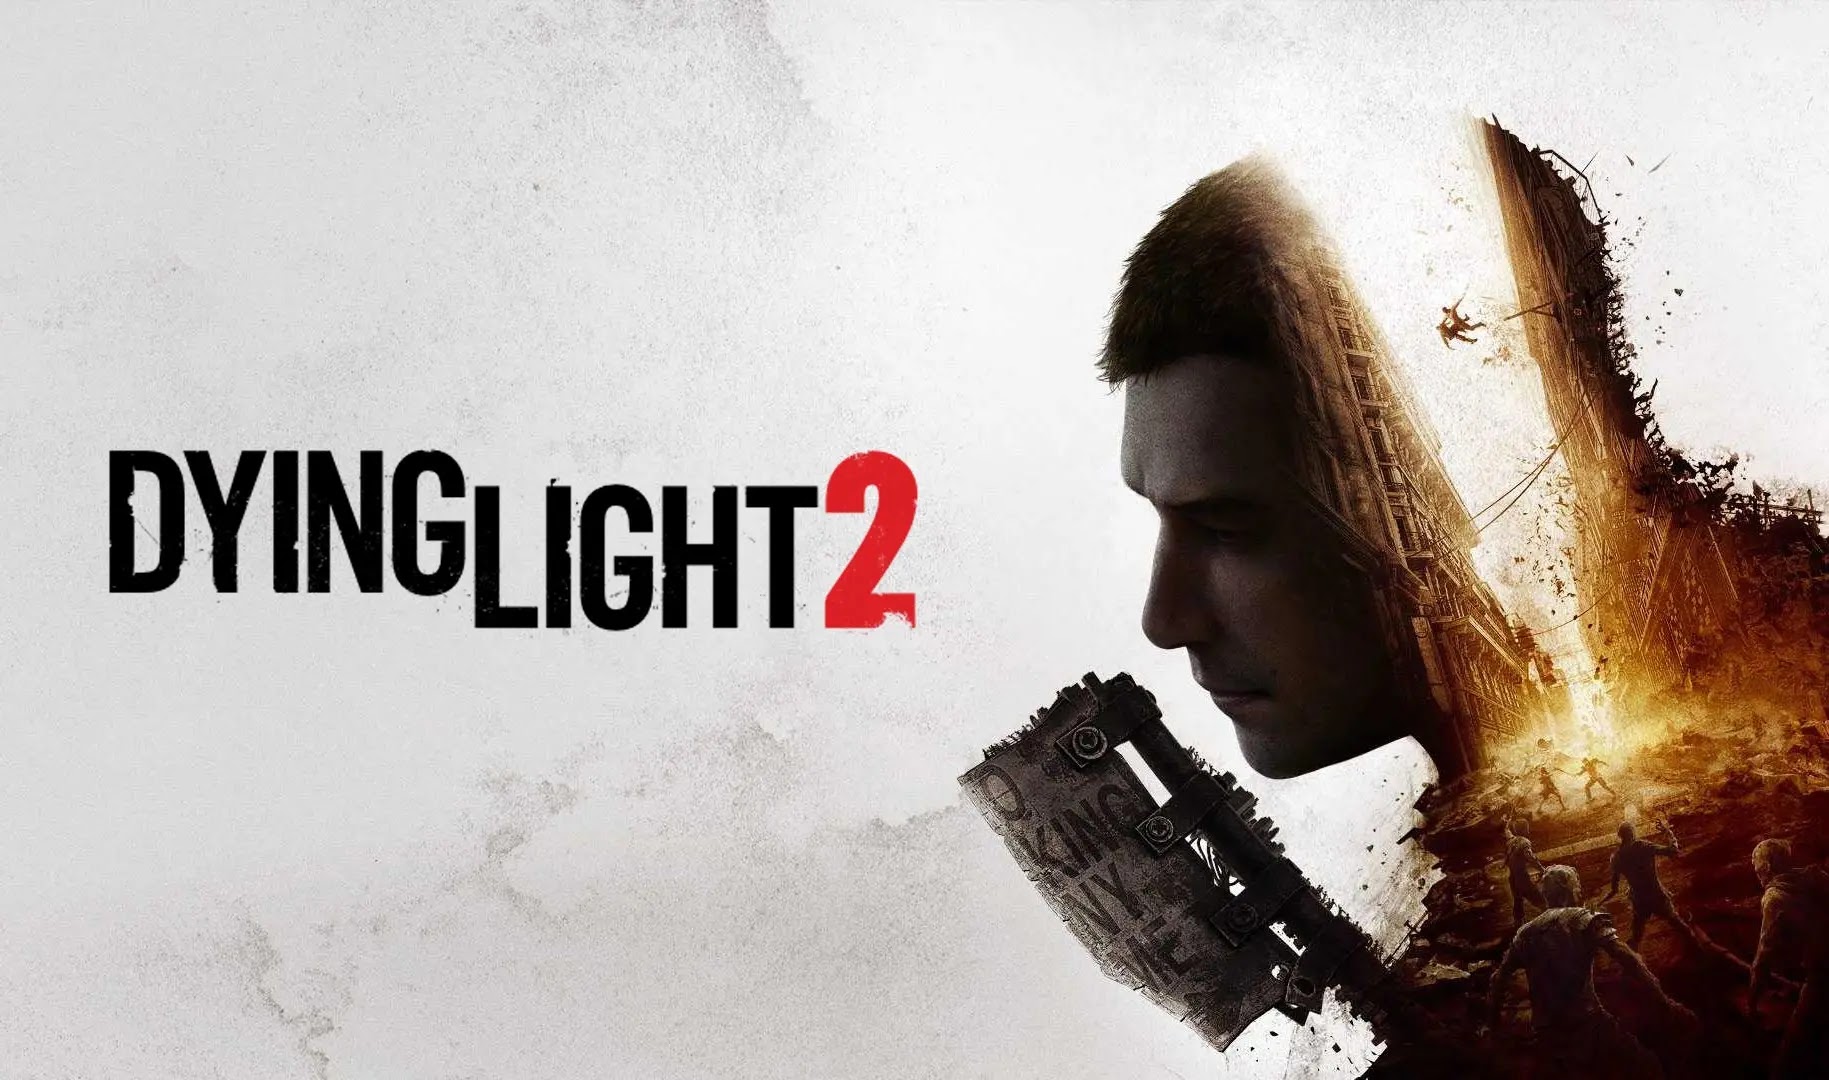 Dying Light 2 เผยตัวอย่างเกมเพลย์ใหม่ พร้อมเปิดให้สั่งจองล่วงหน้าแล้วบน Steam และเตรียมเปิดให้เล่น 7 ธันวาคมนี้ 